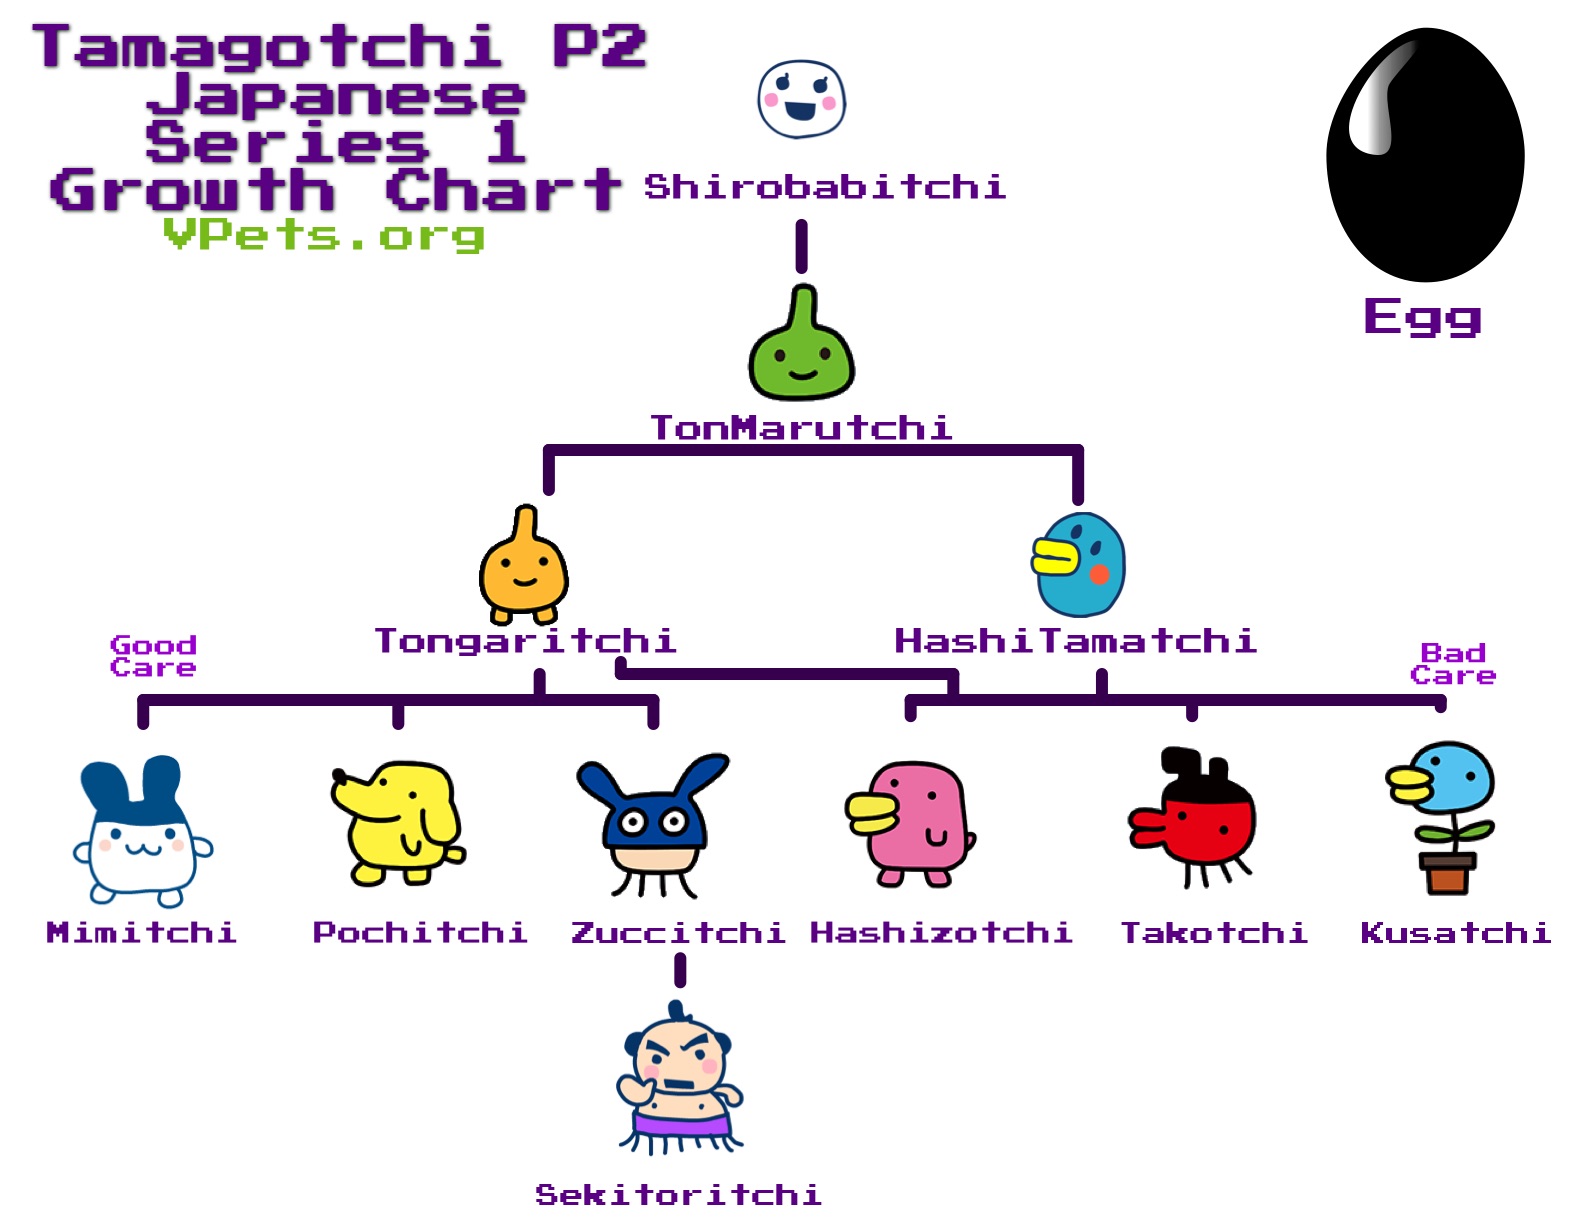 Original Tamagotchi Growth Chart